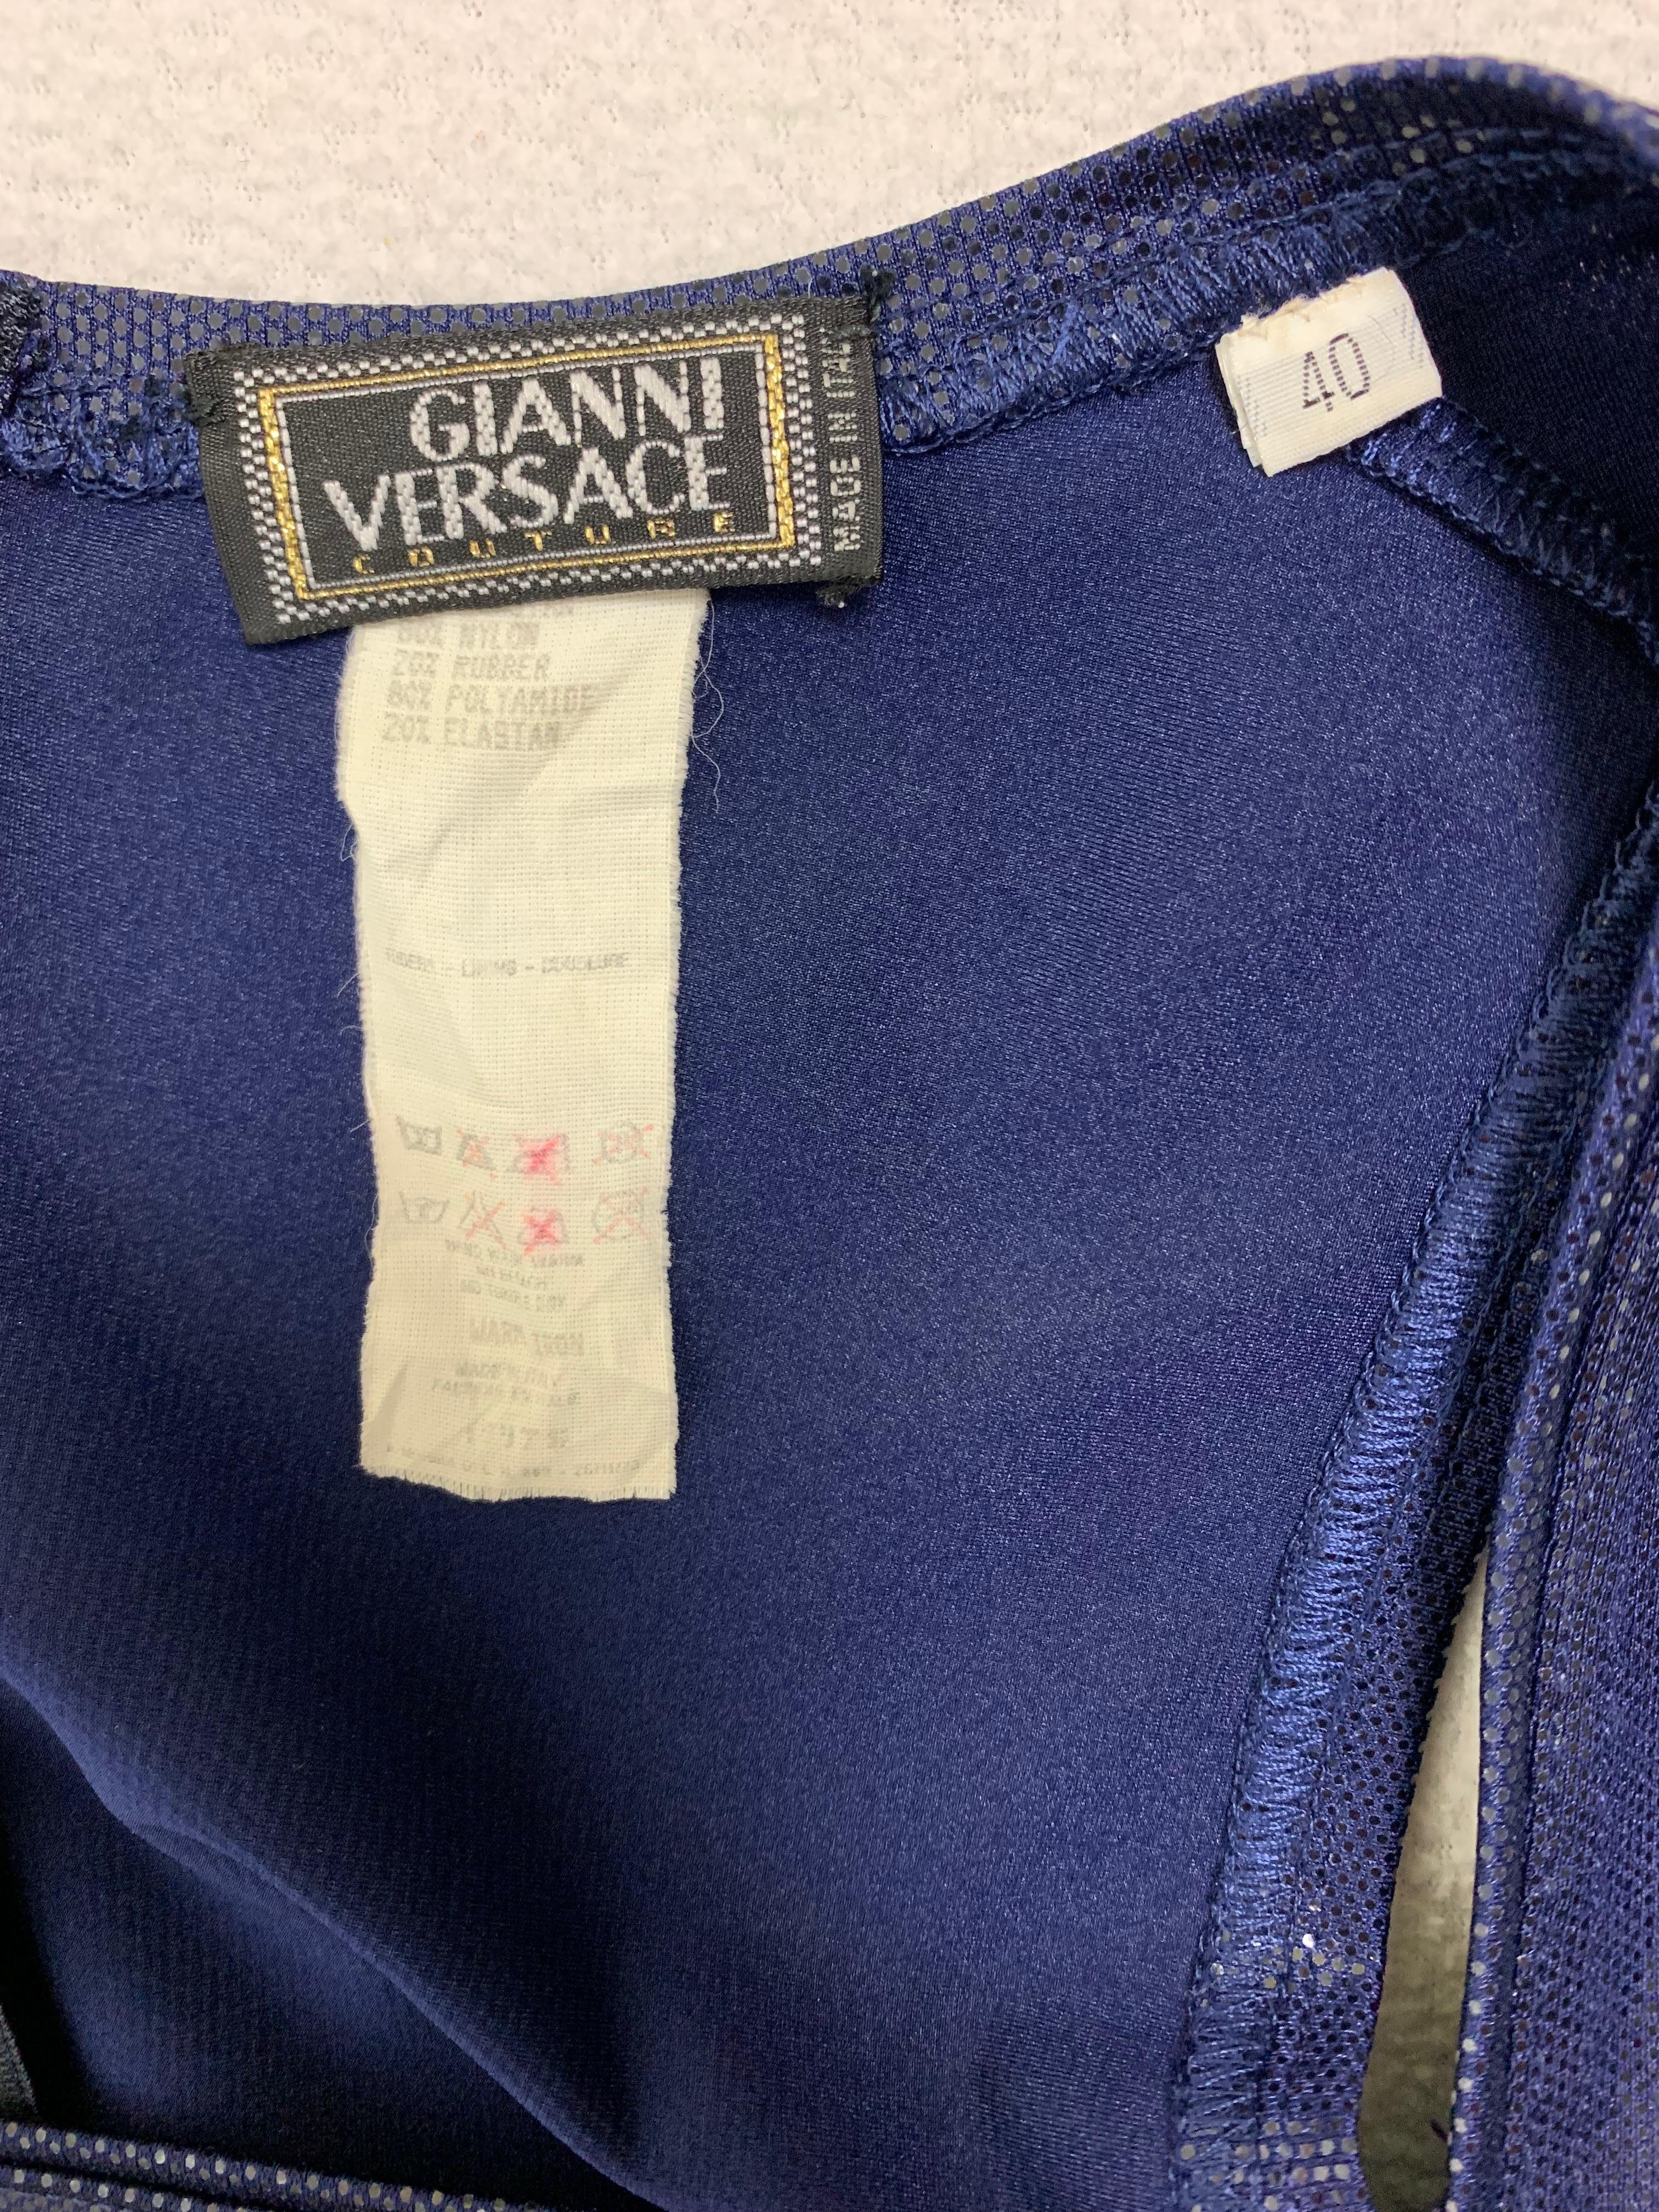 Black 1994 Gianni Versace Latex Wet Look Navy Blue Bodycon Dominatrix Dress